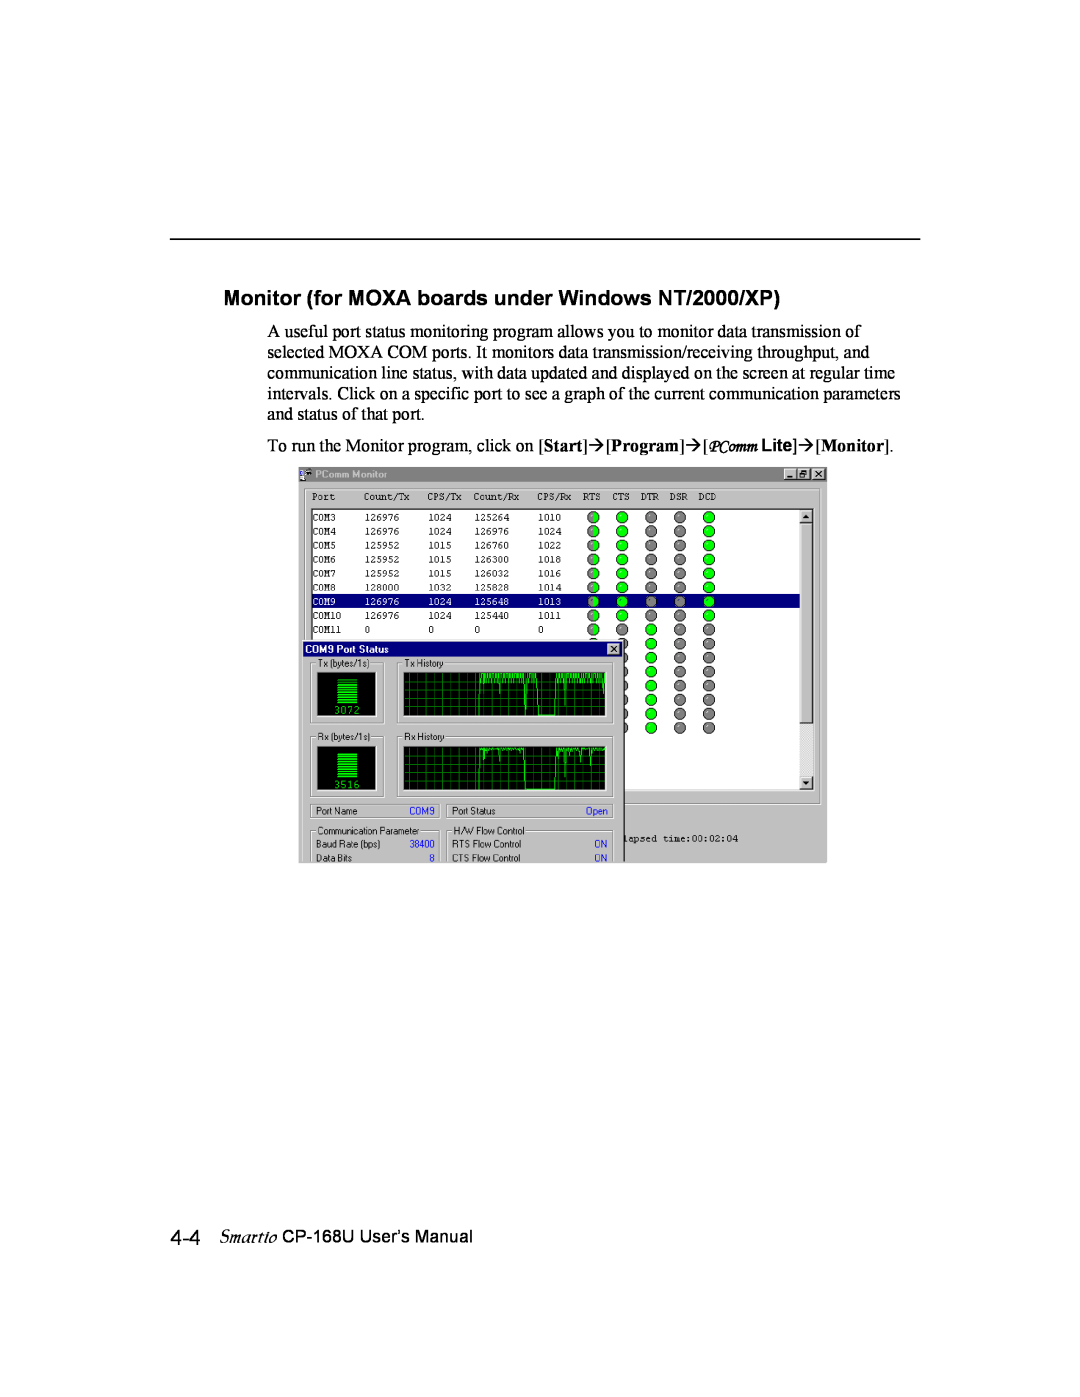 Moxa Technologies user manual Monitor for MOXA boards under Windows NT/2000/XP, Smartio CP-168U User’s Manual 